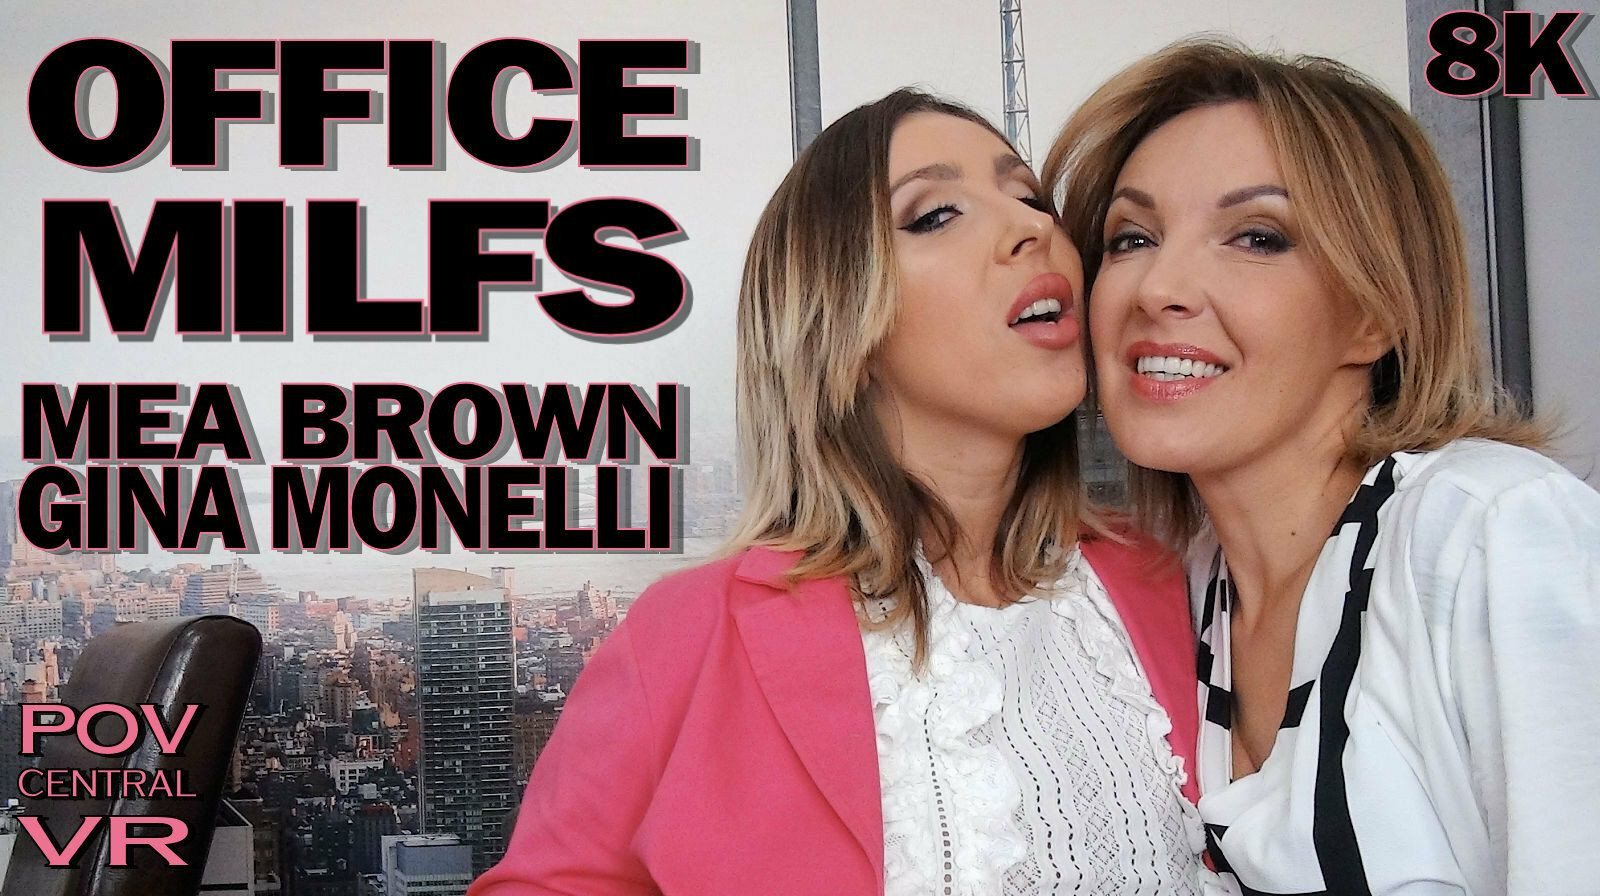 Gina Monelli and Mea Brown: Office MILFs: Gina Monelli Slideshow